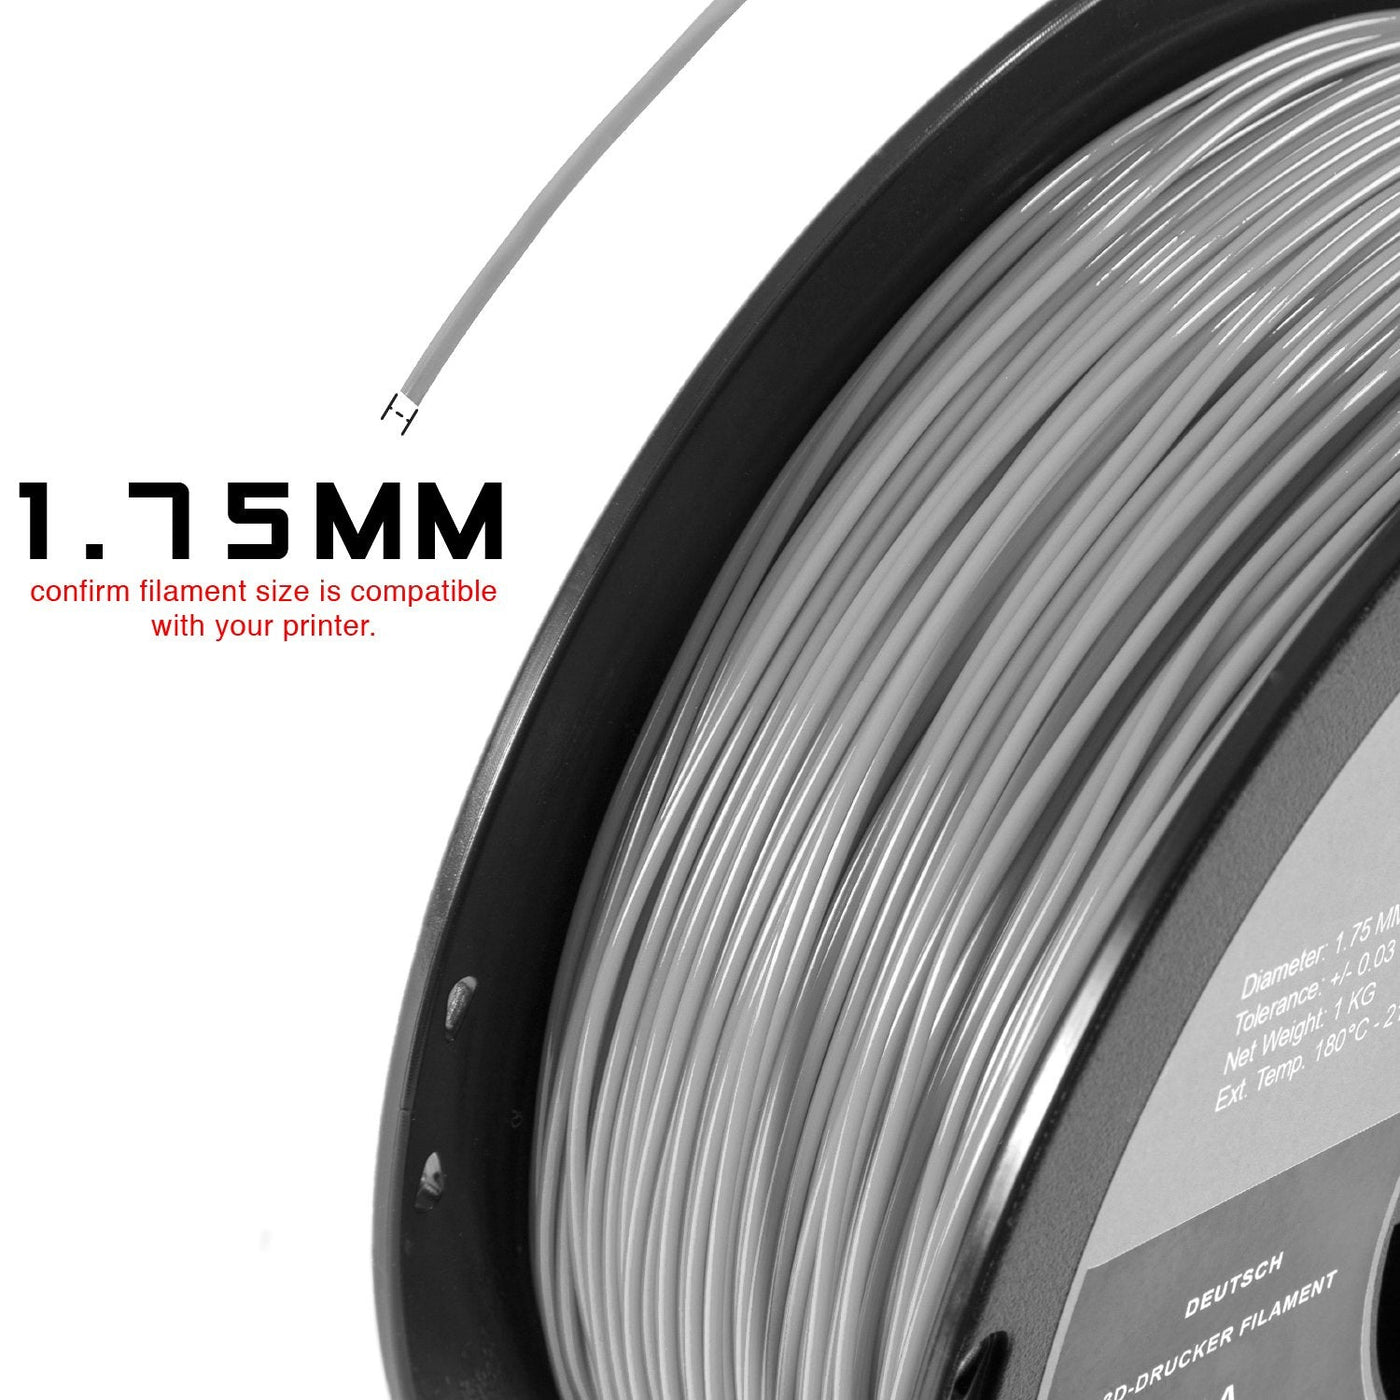 Silver PLA filament 1kg